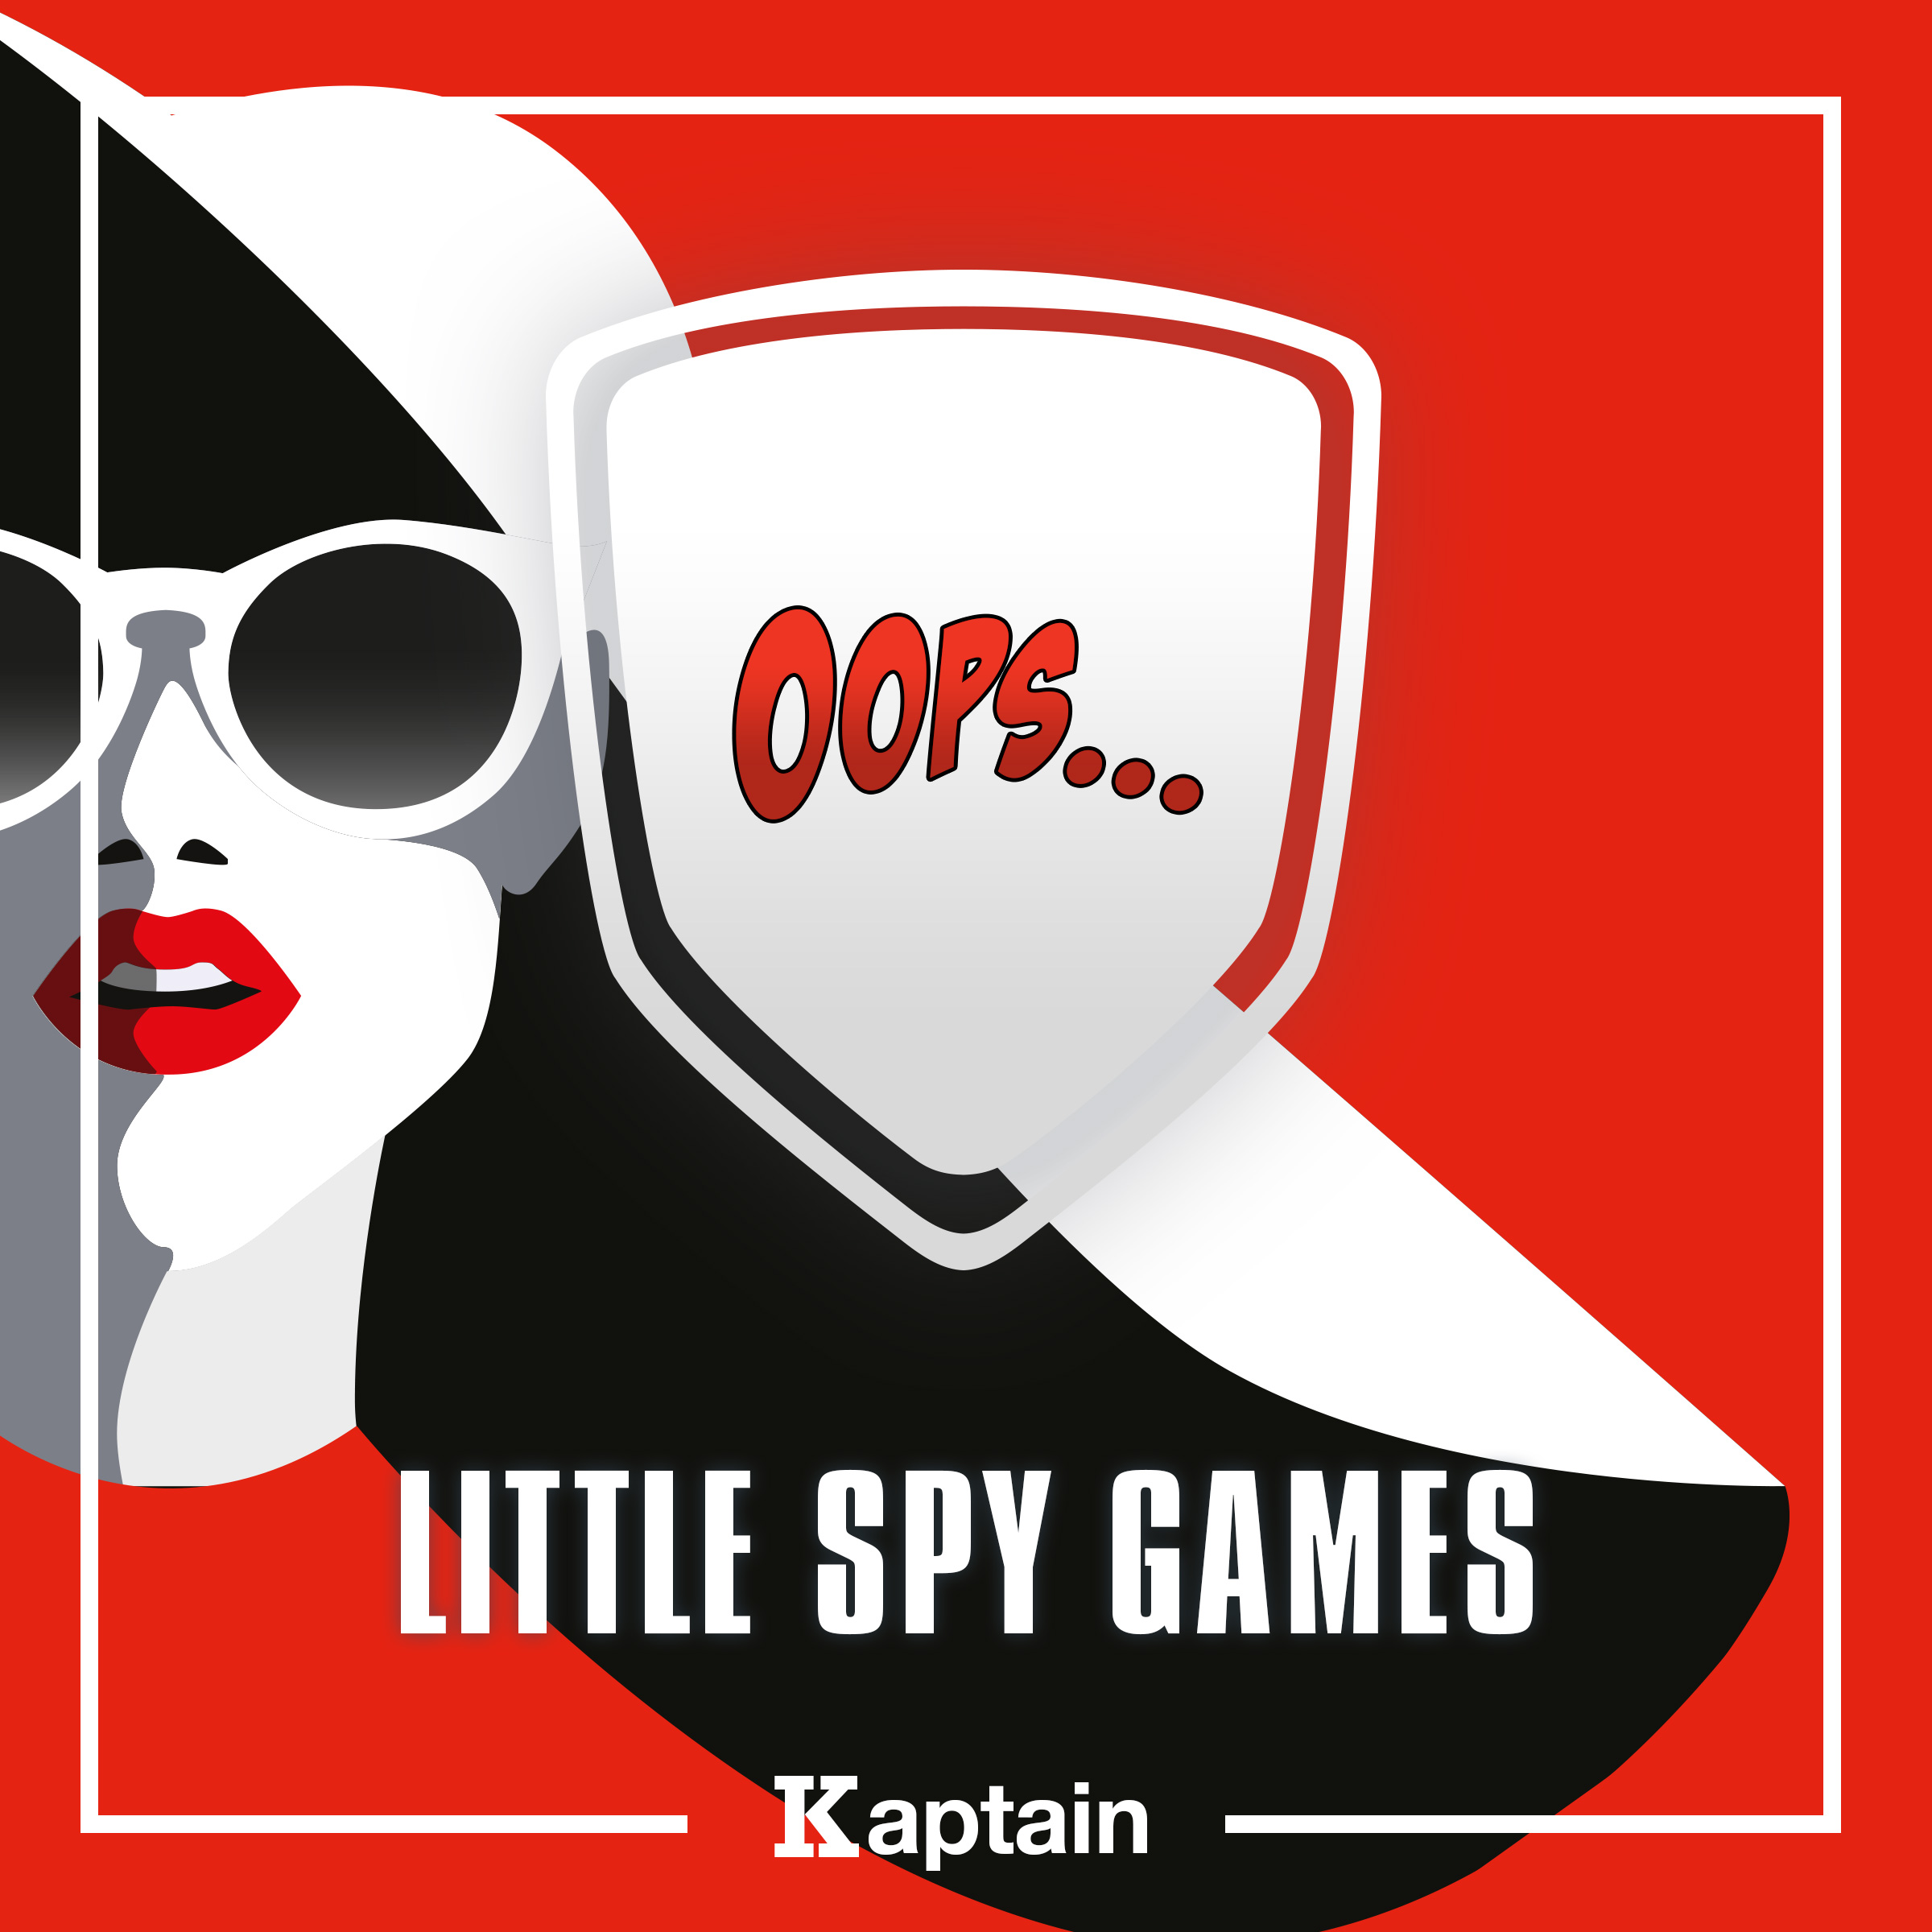 Little Spy Games